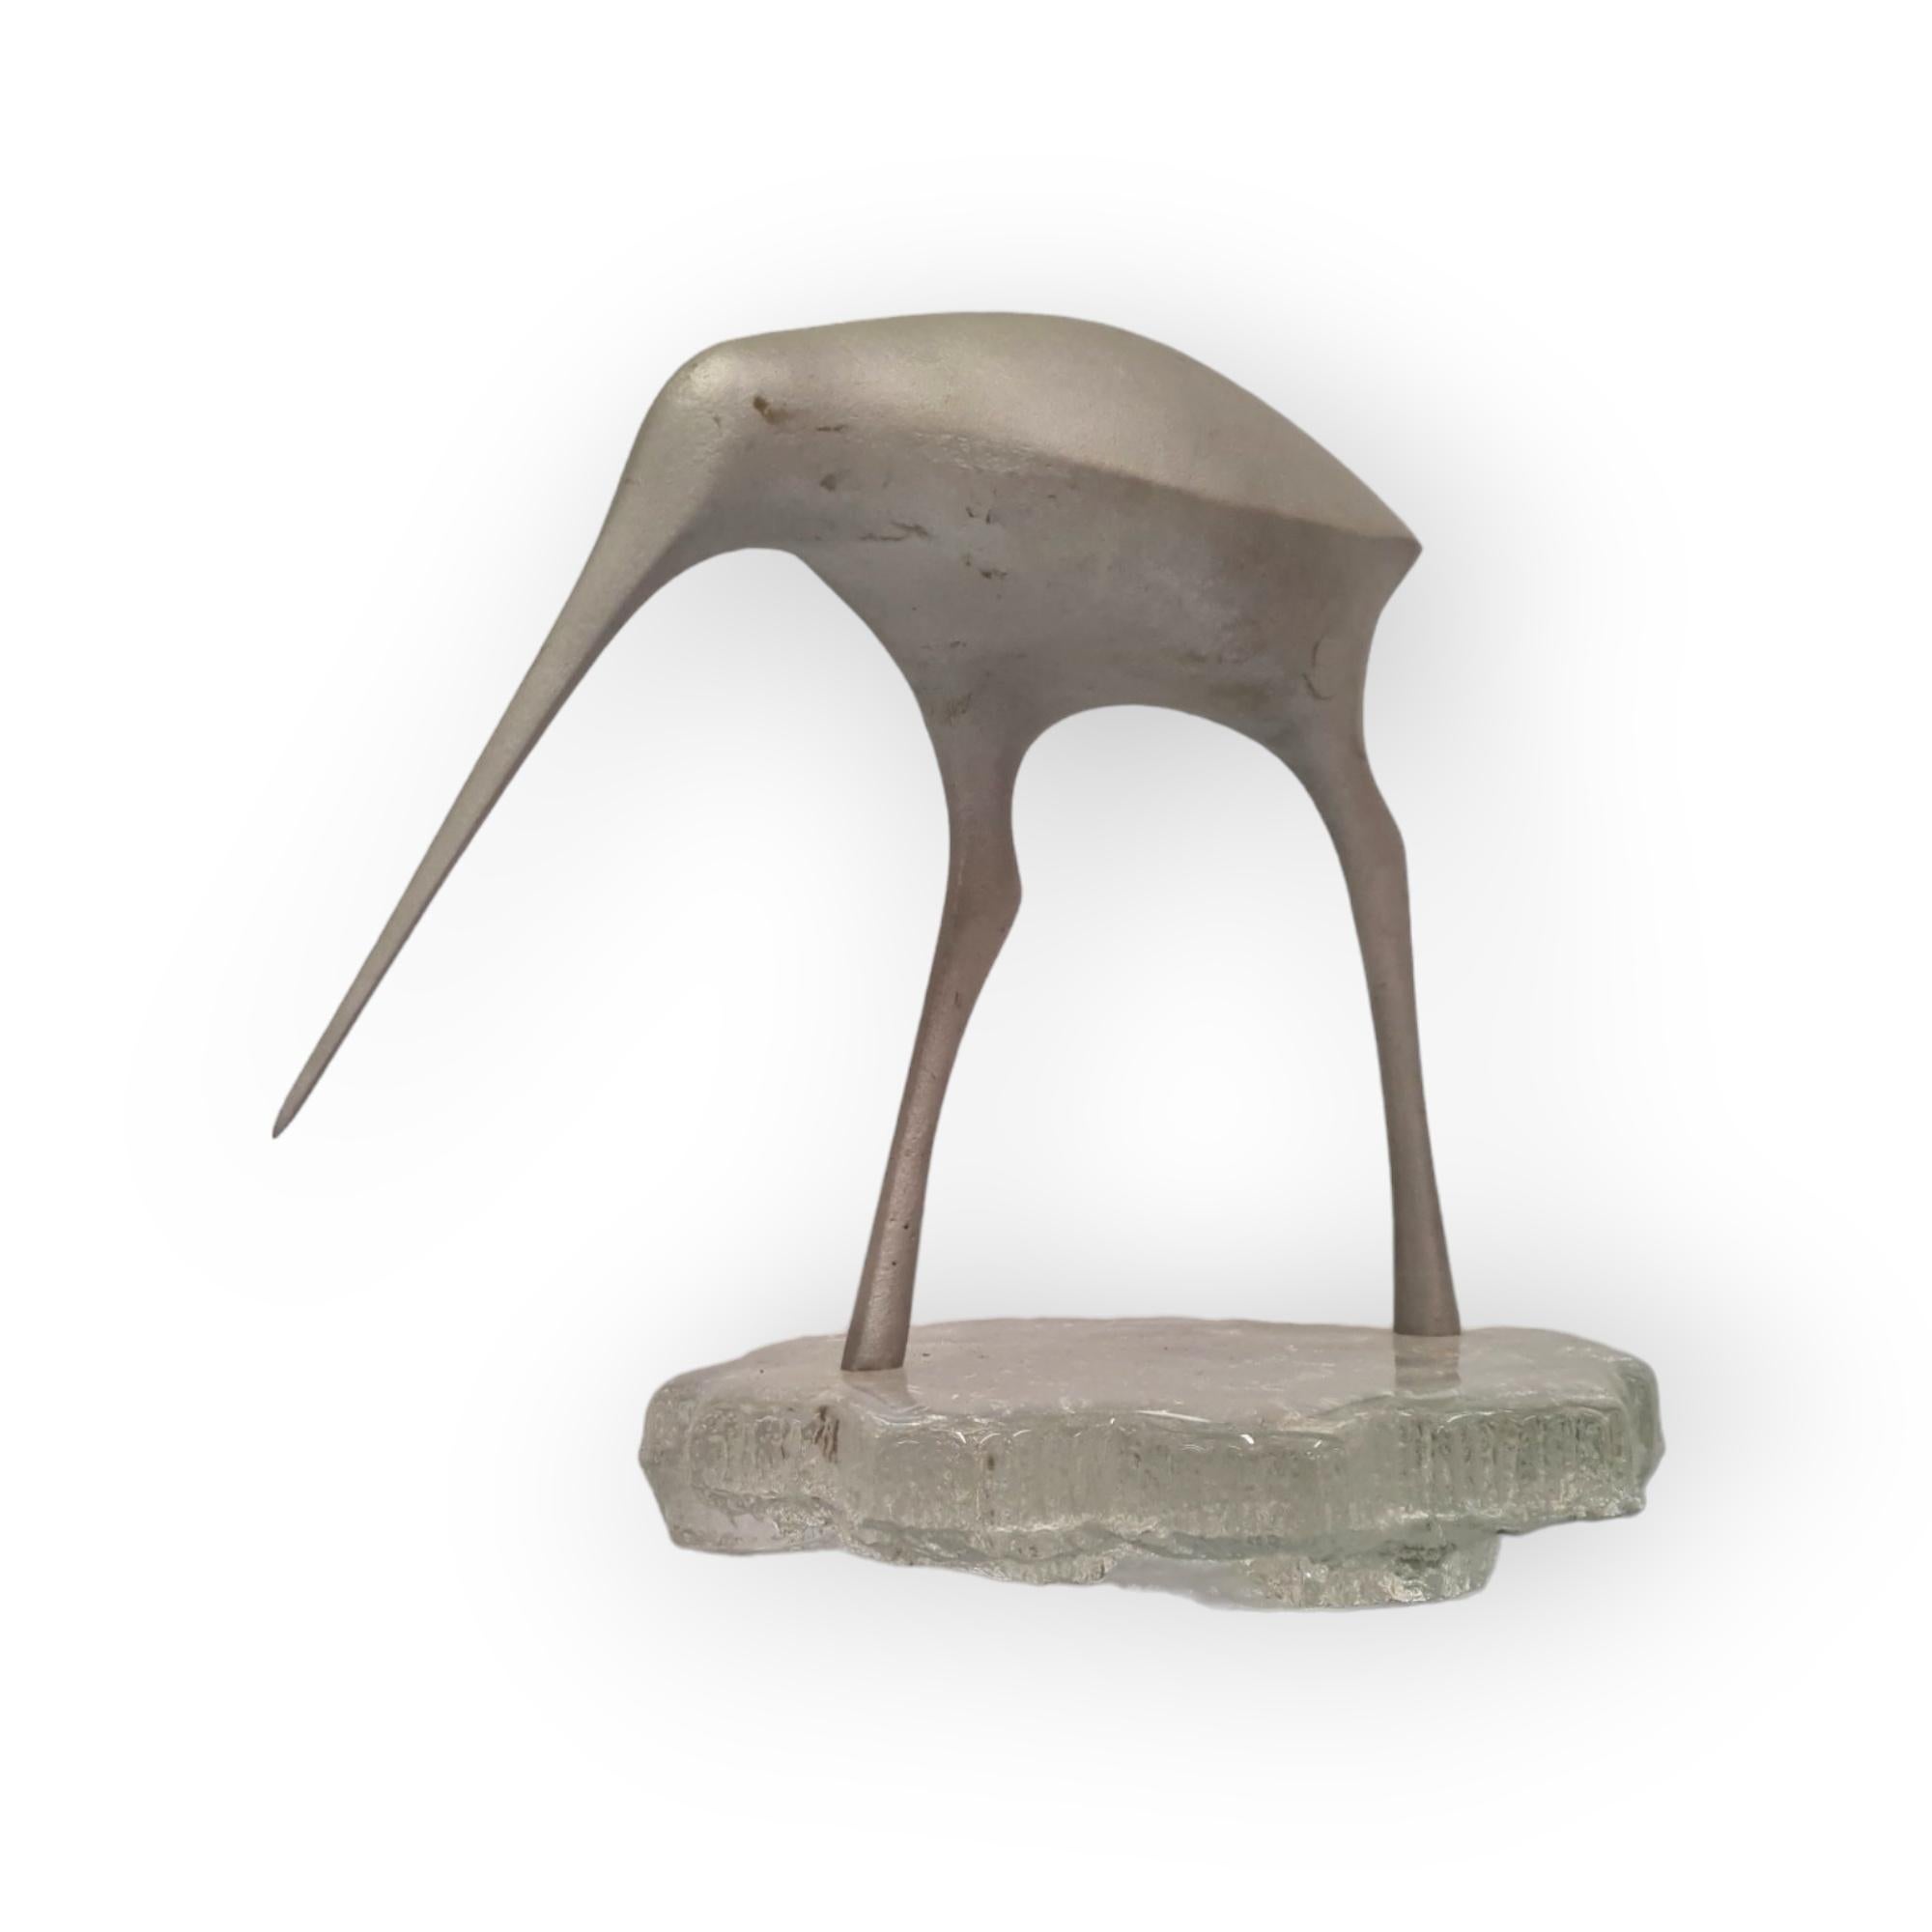 Scandinavian Modern `Suokurppa`or Bog Snipe bird sculpture by Tapio Wirkkala for Kultakeskus